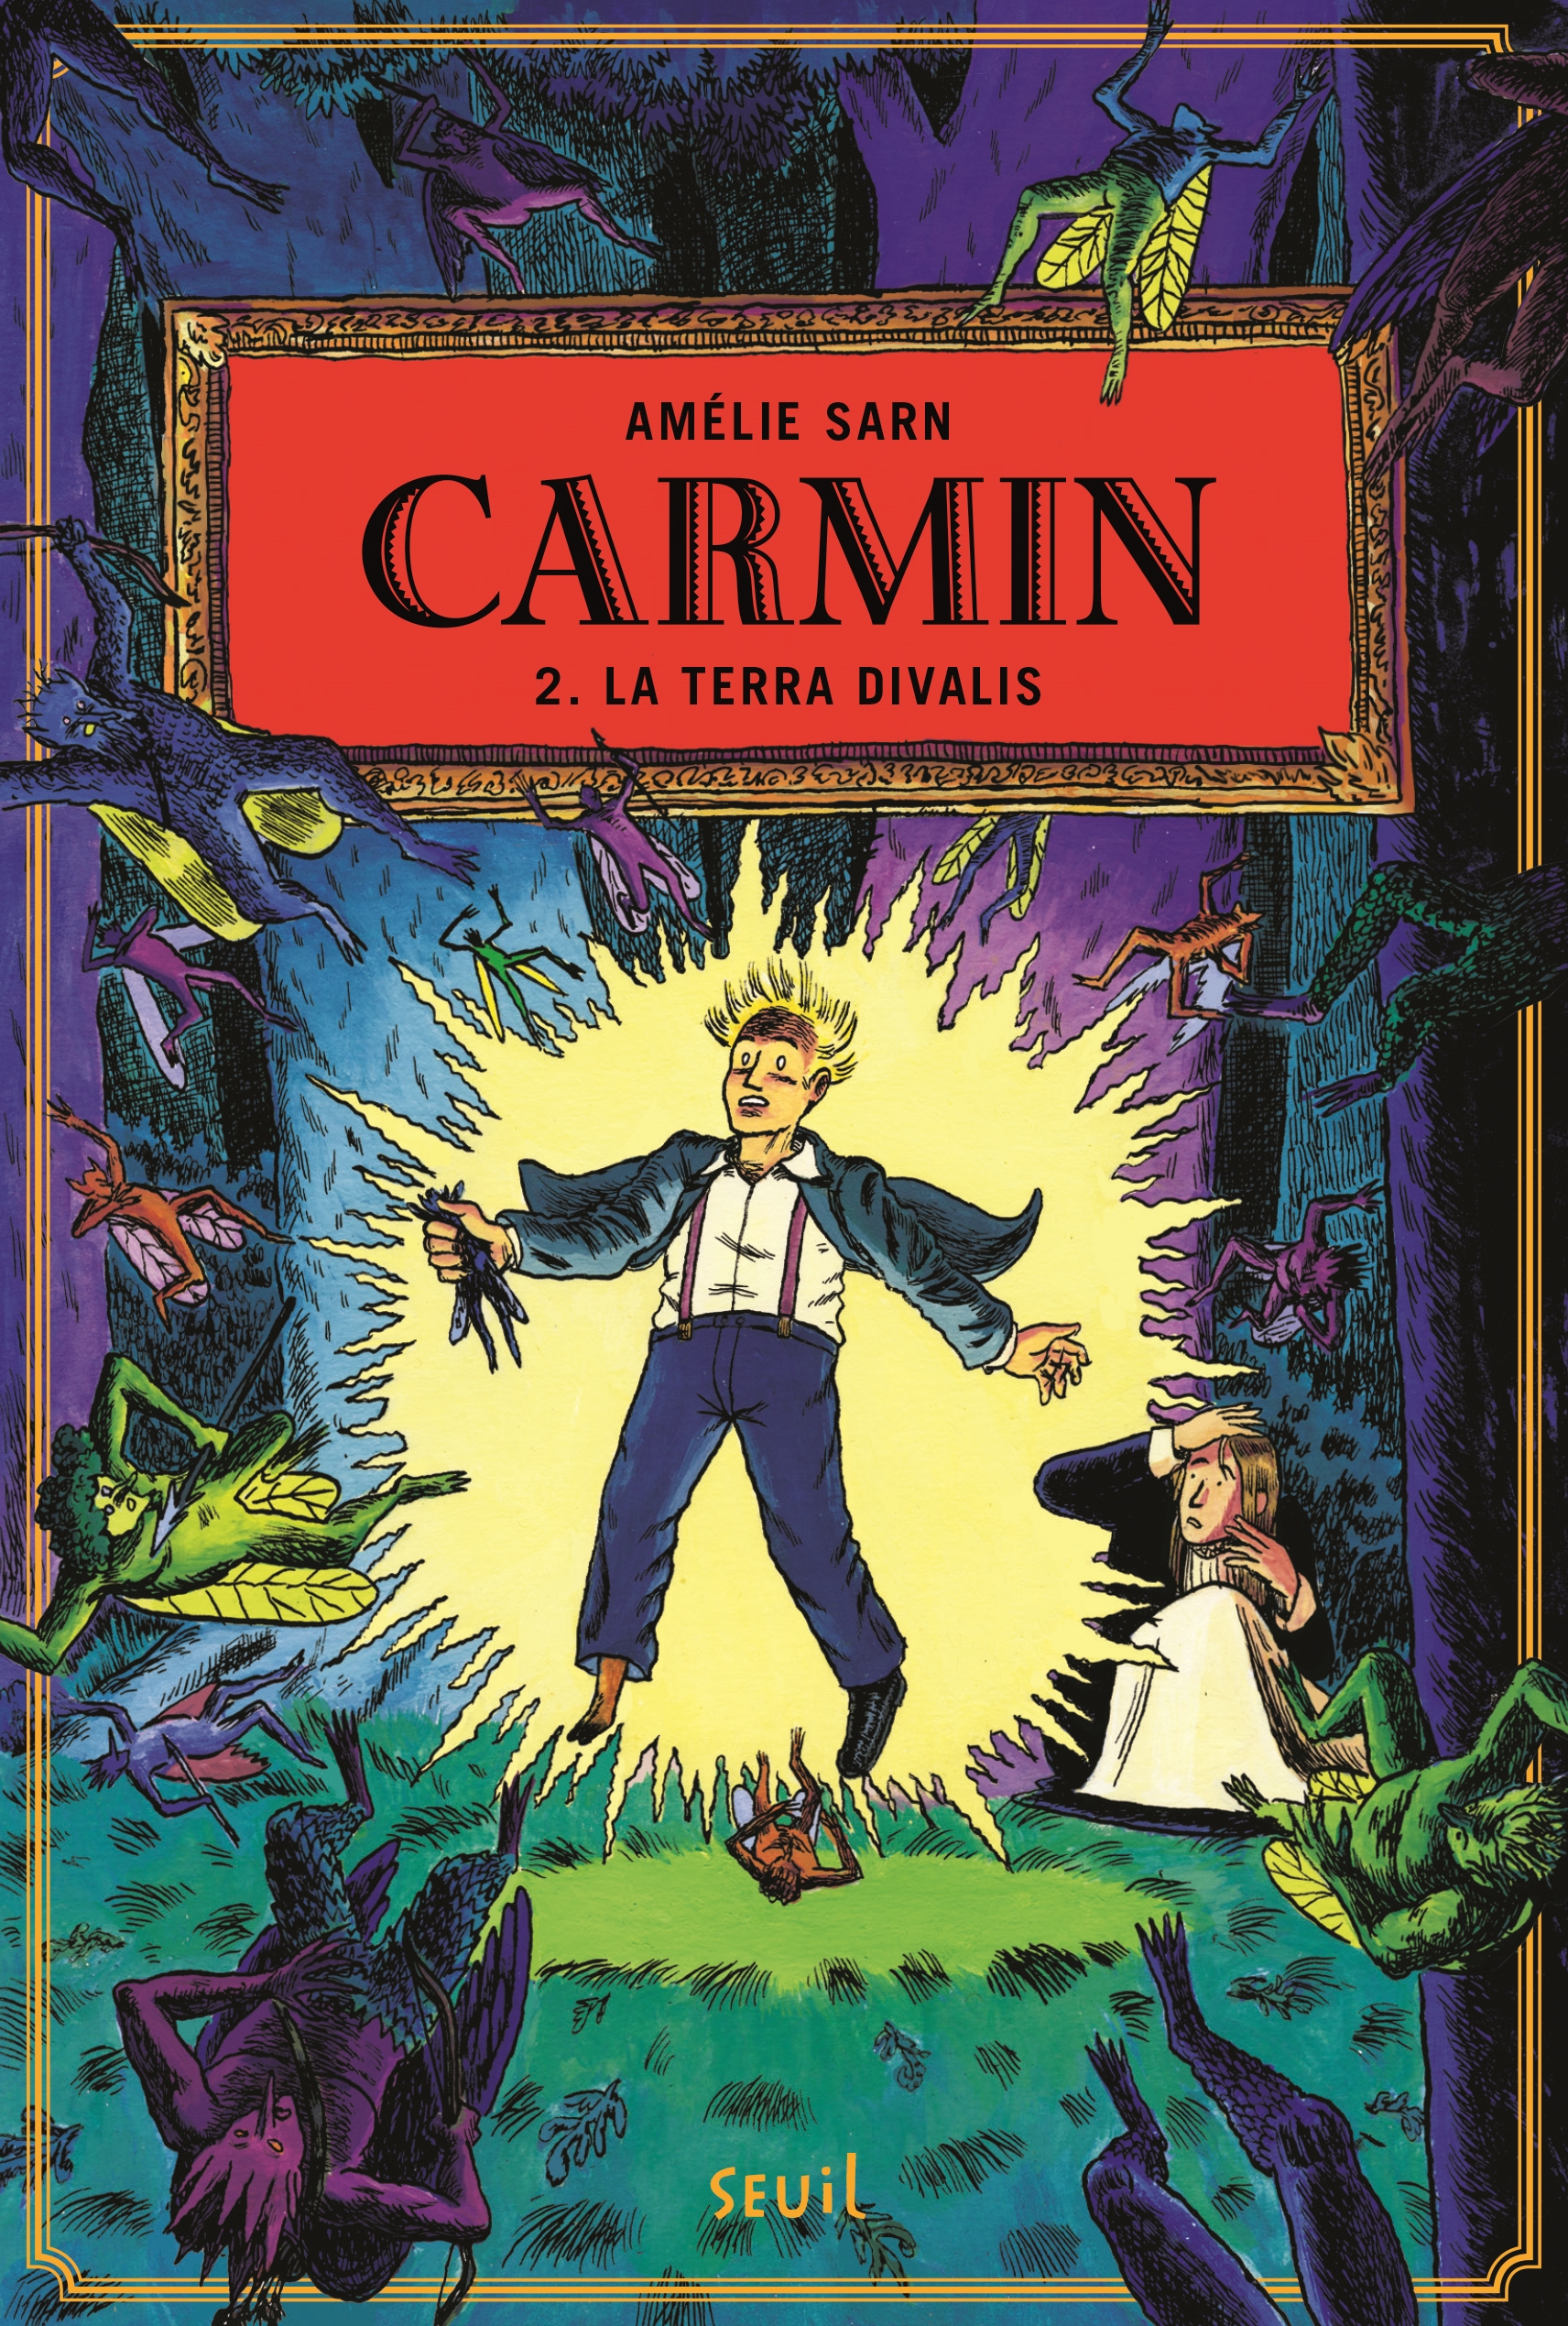 Afficher "Carmin, tome 2"